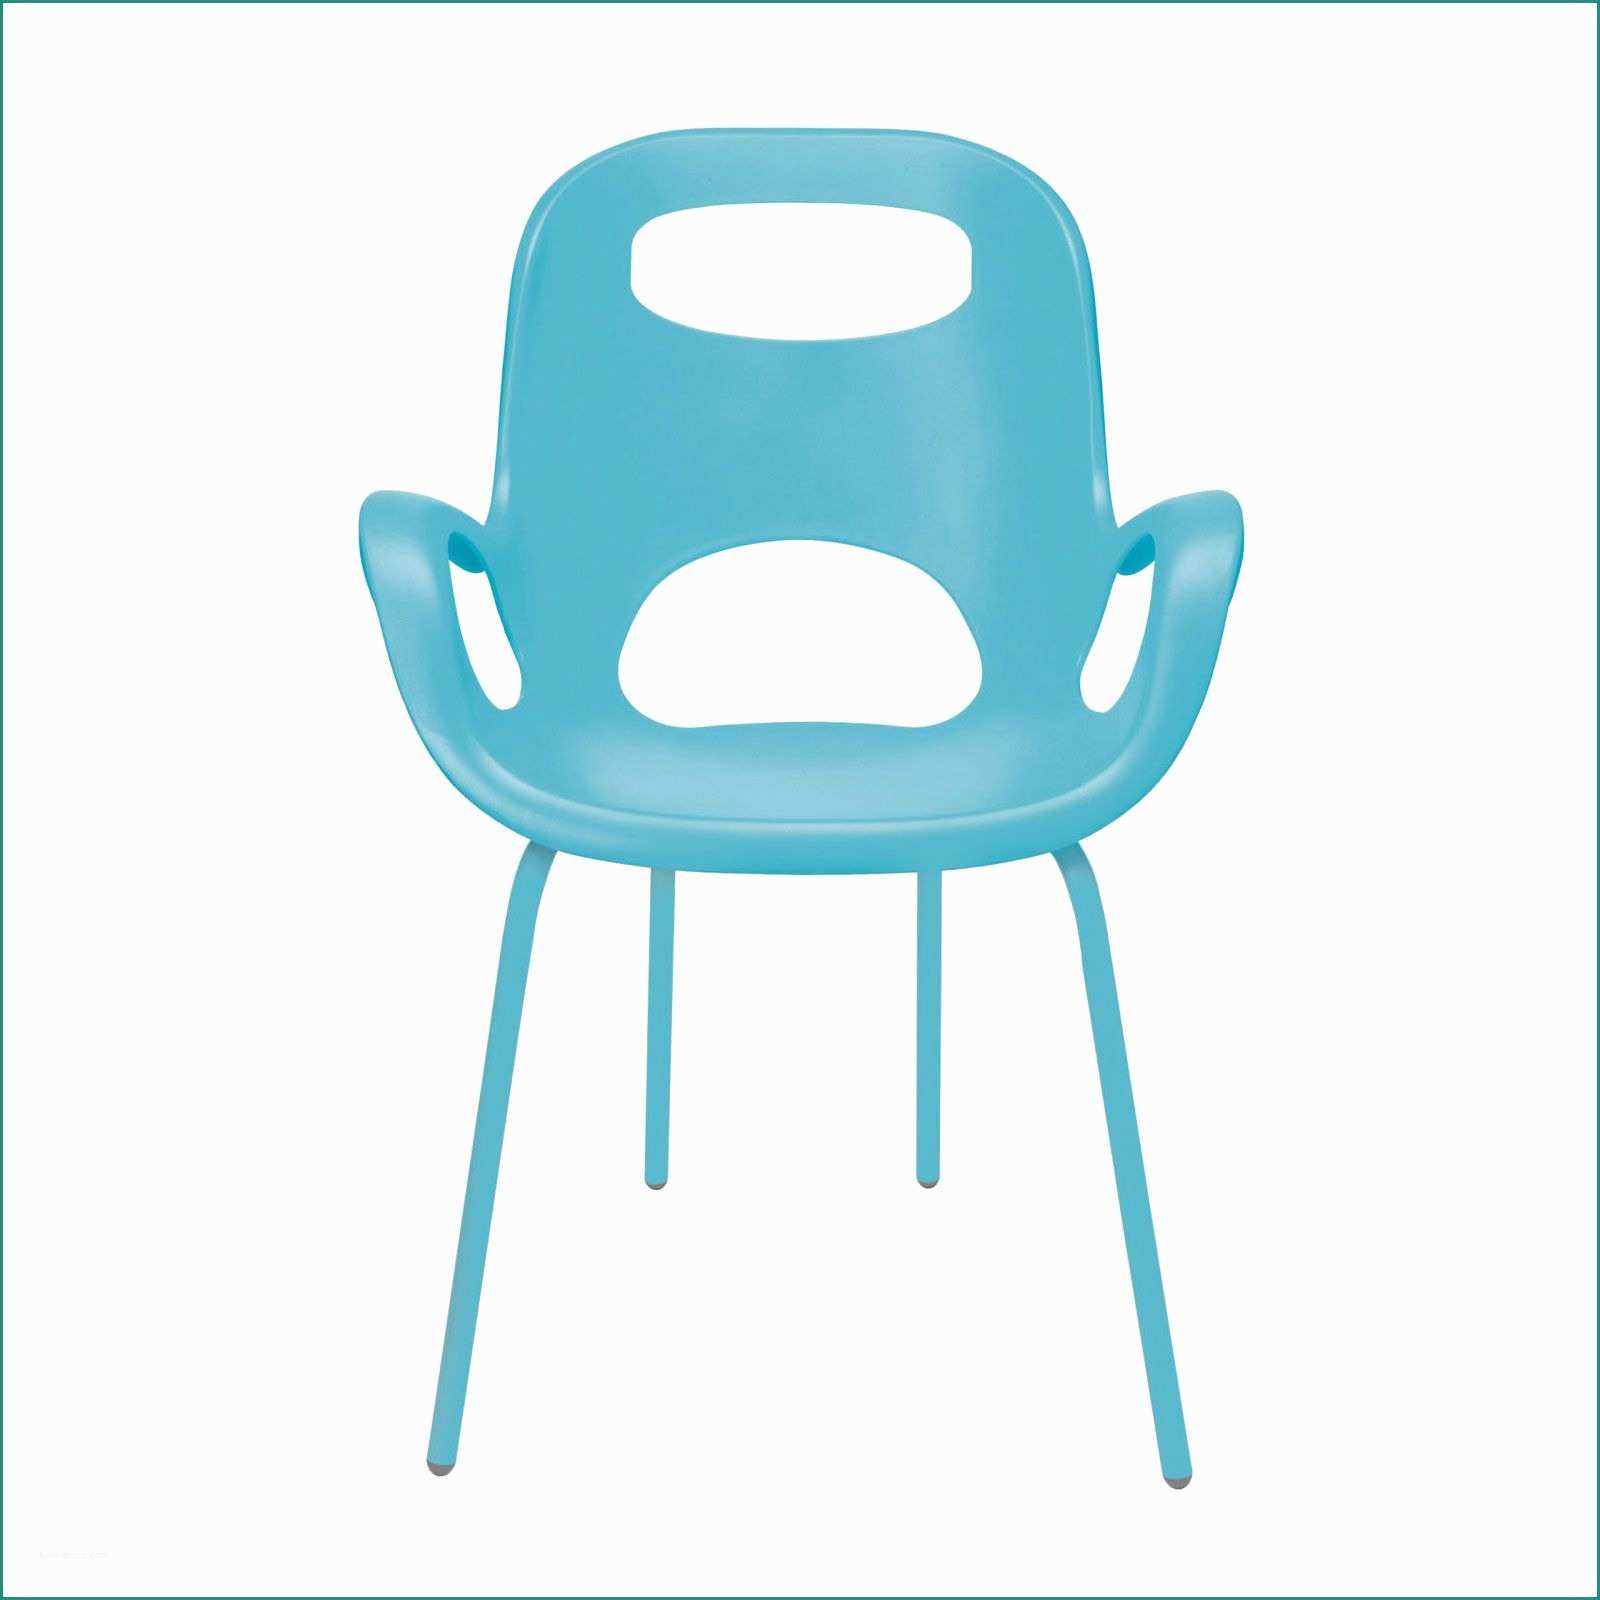 Sedia Per Bagno E Cut Out Chair In Blue Set Of 2 Dotandbo Furniture